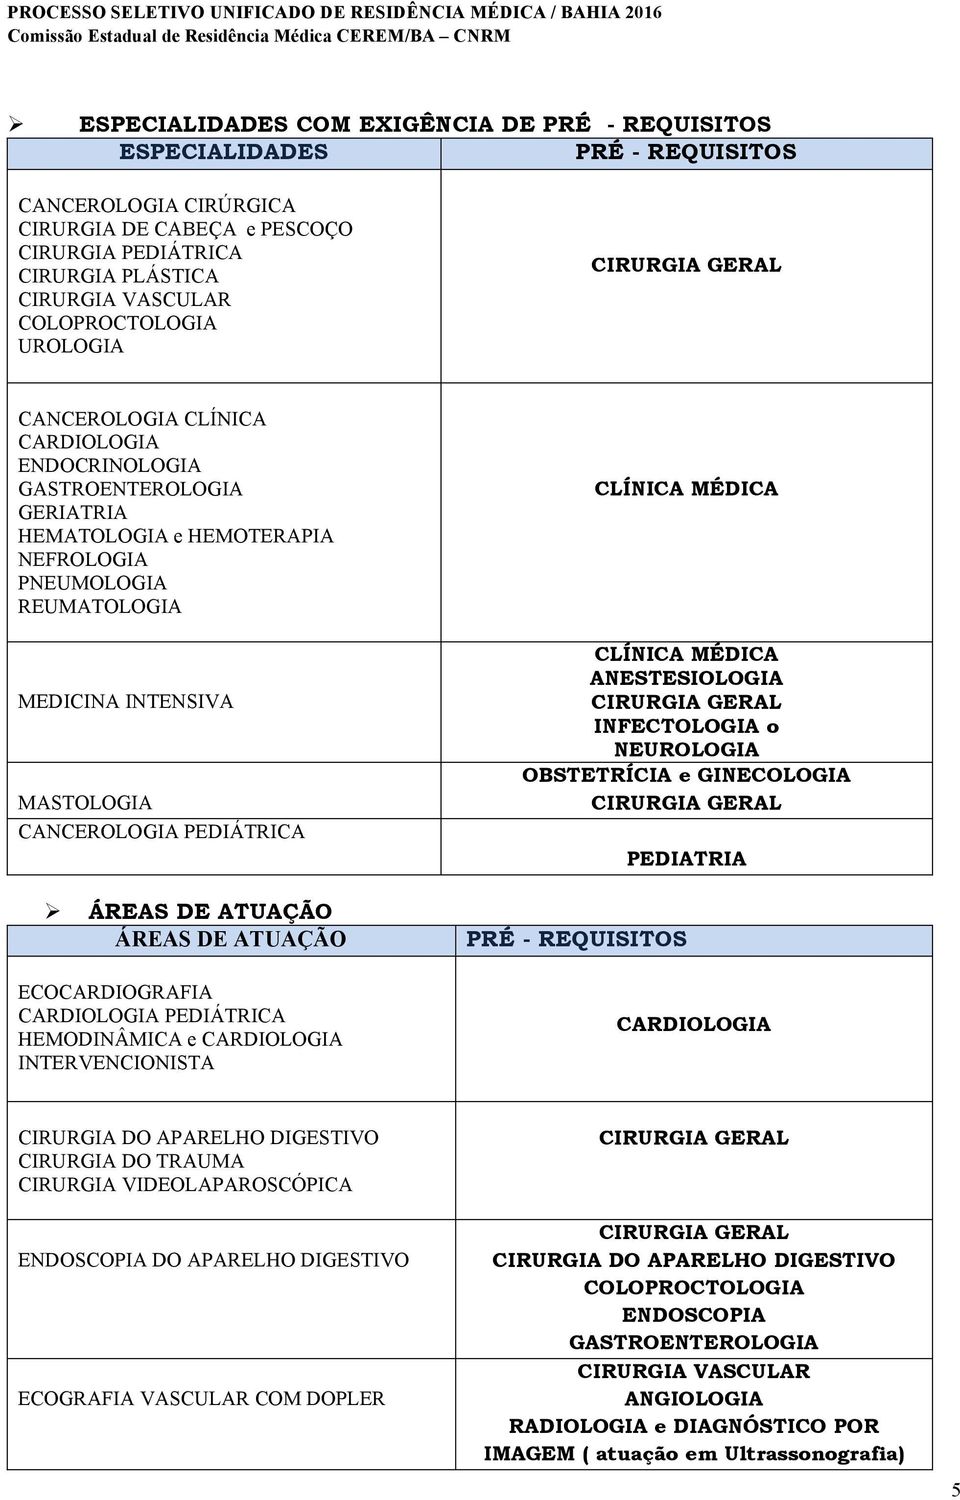 MASTOLOGIA CANCEROLOGIA PEDIÁTRICA CLÍNICA MÉDICA CLÍNICA MÉDICA ANESTESIOLOGIA CIRURGIA GERAL INFECTOLOGIA o NEUROLOGIA OBSTETRÍCIA e GINECOLOGIA CIRURGIA GERAL PEDIATRIA Ø ÁREAS DE ATUAÇÃO ÁREAS DE